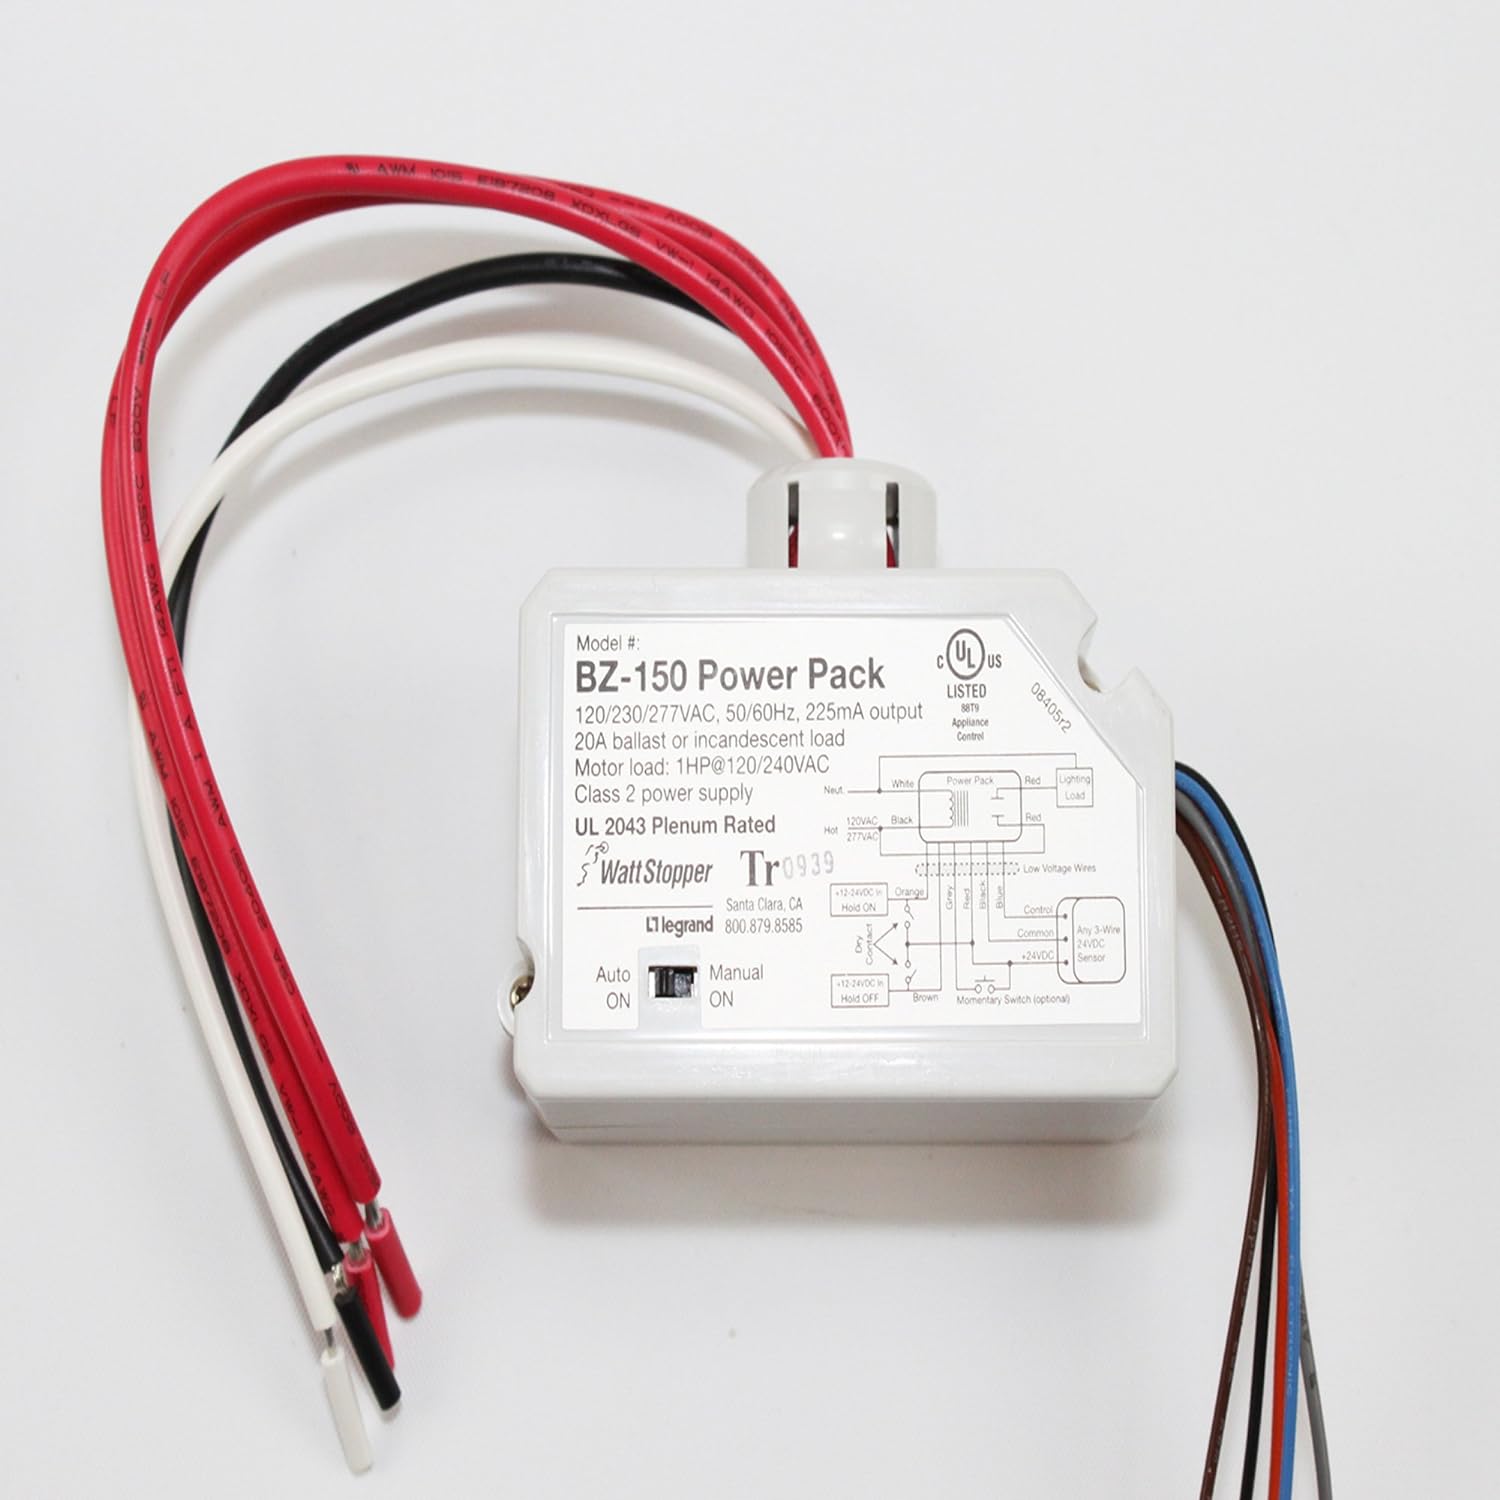 wattstopper power pack wiring diagram